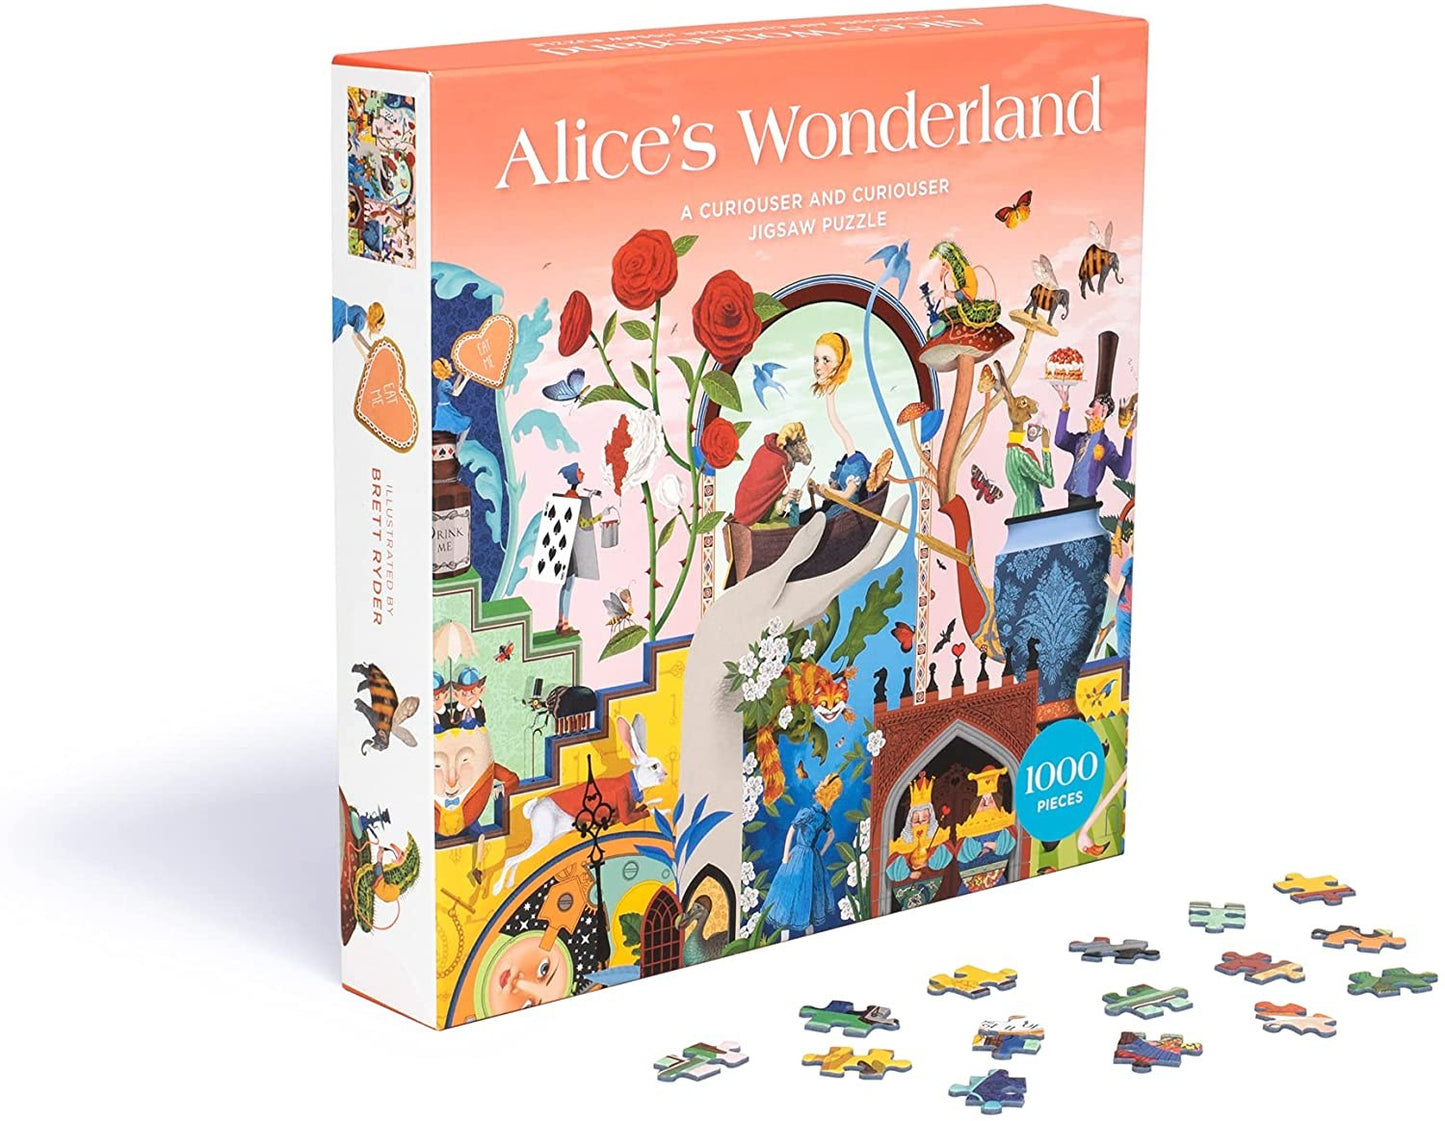 Puzzle Walt Disney: Alice in Wonderland, 1 000 pieces